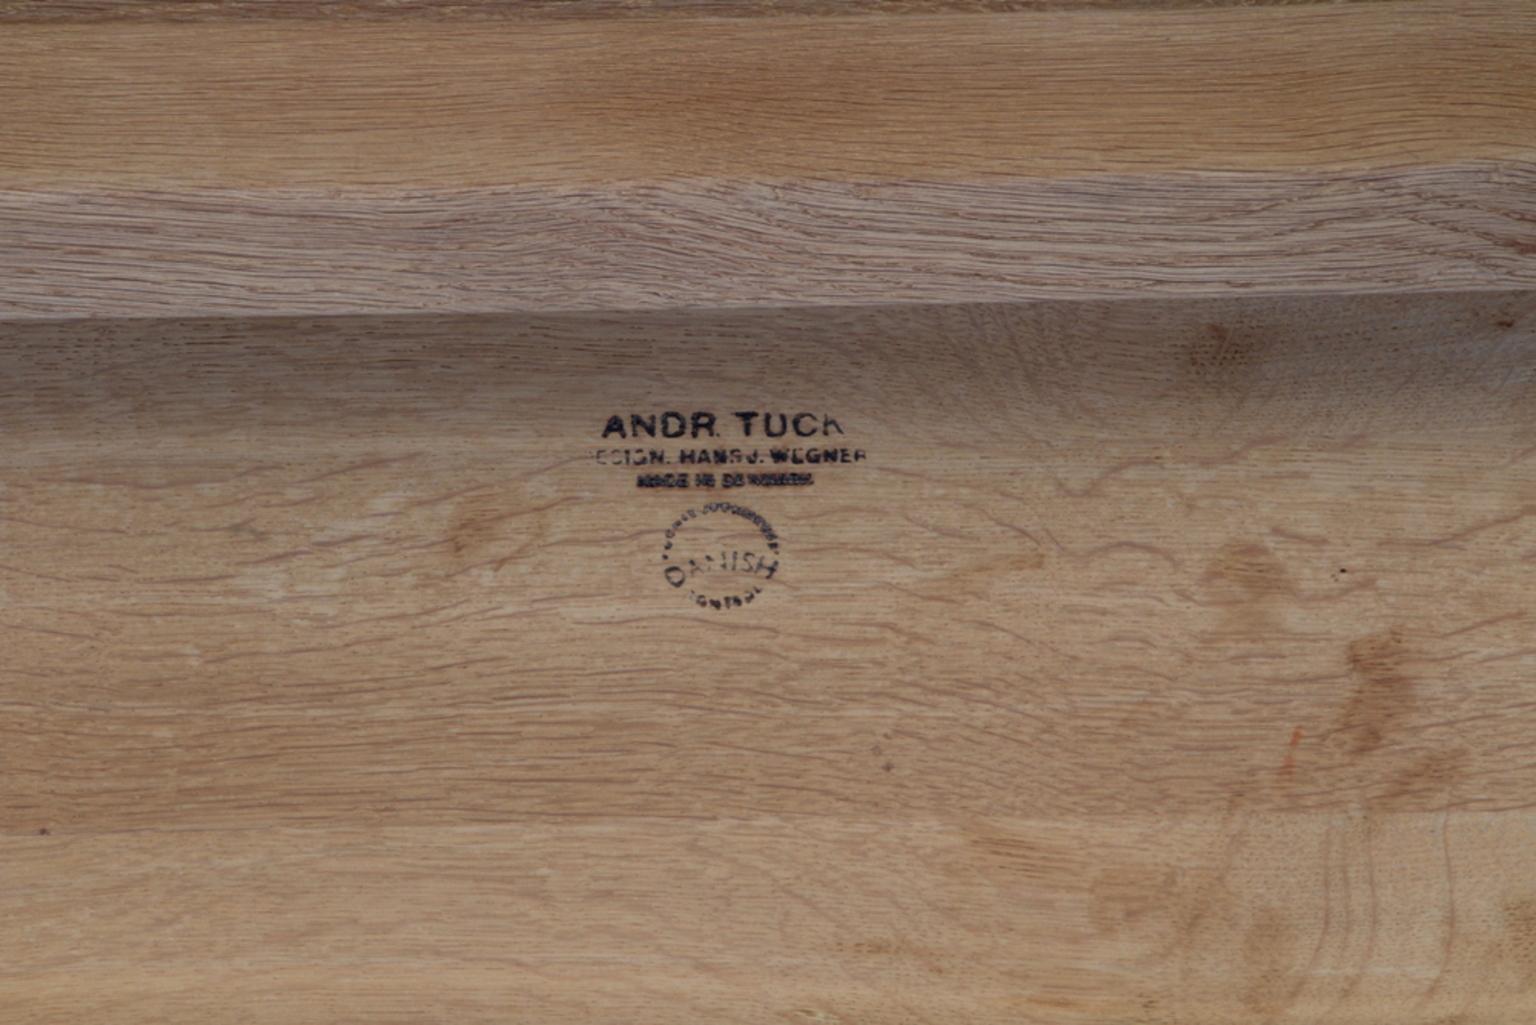 Danish Hans J. Wegner Sofa Table, Model AT15, Solid Oak, Andreas Tuck